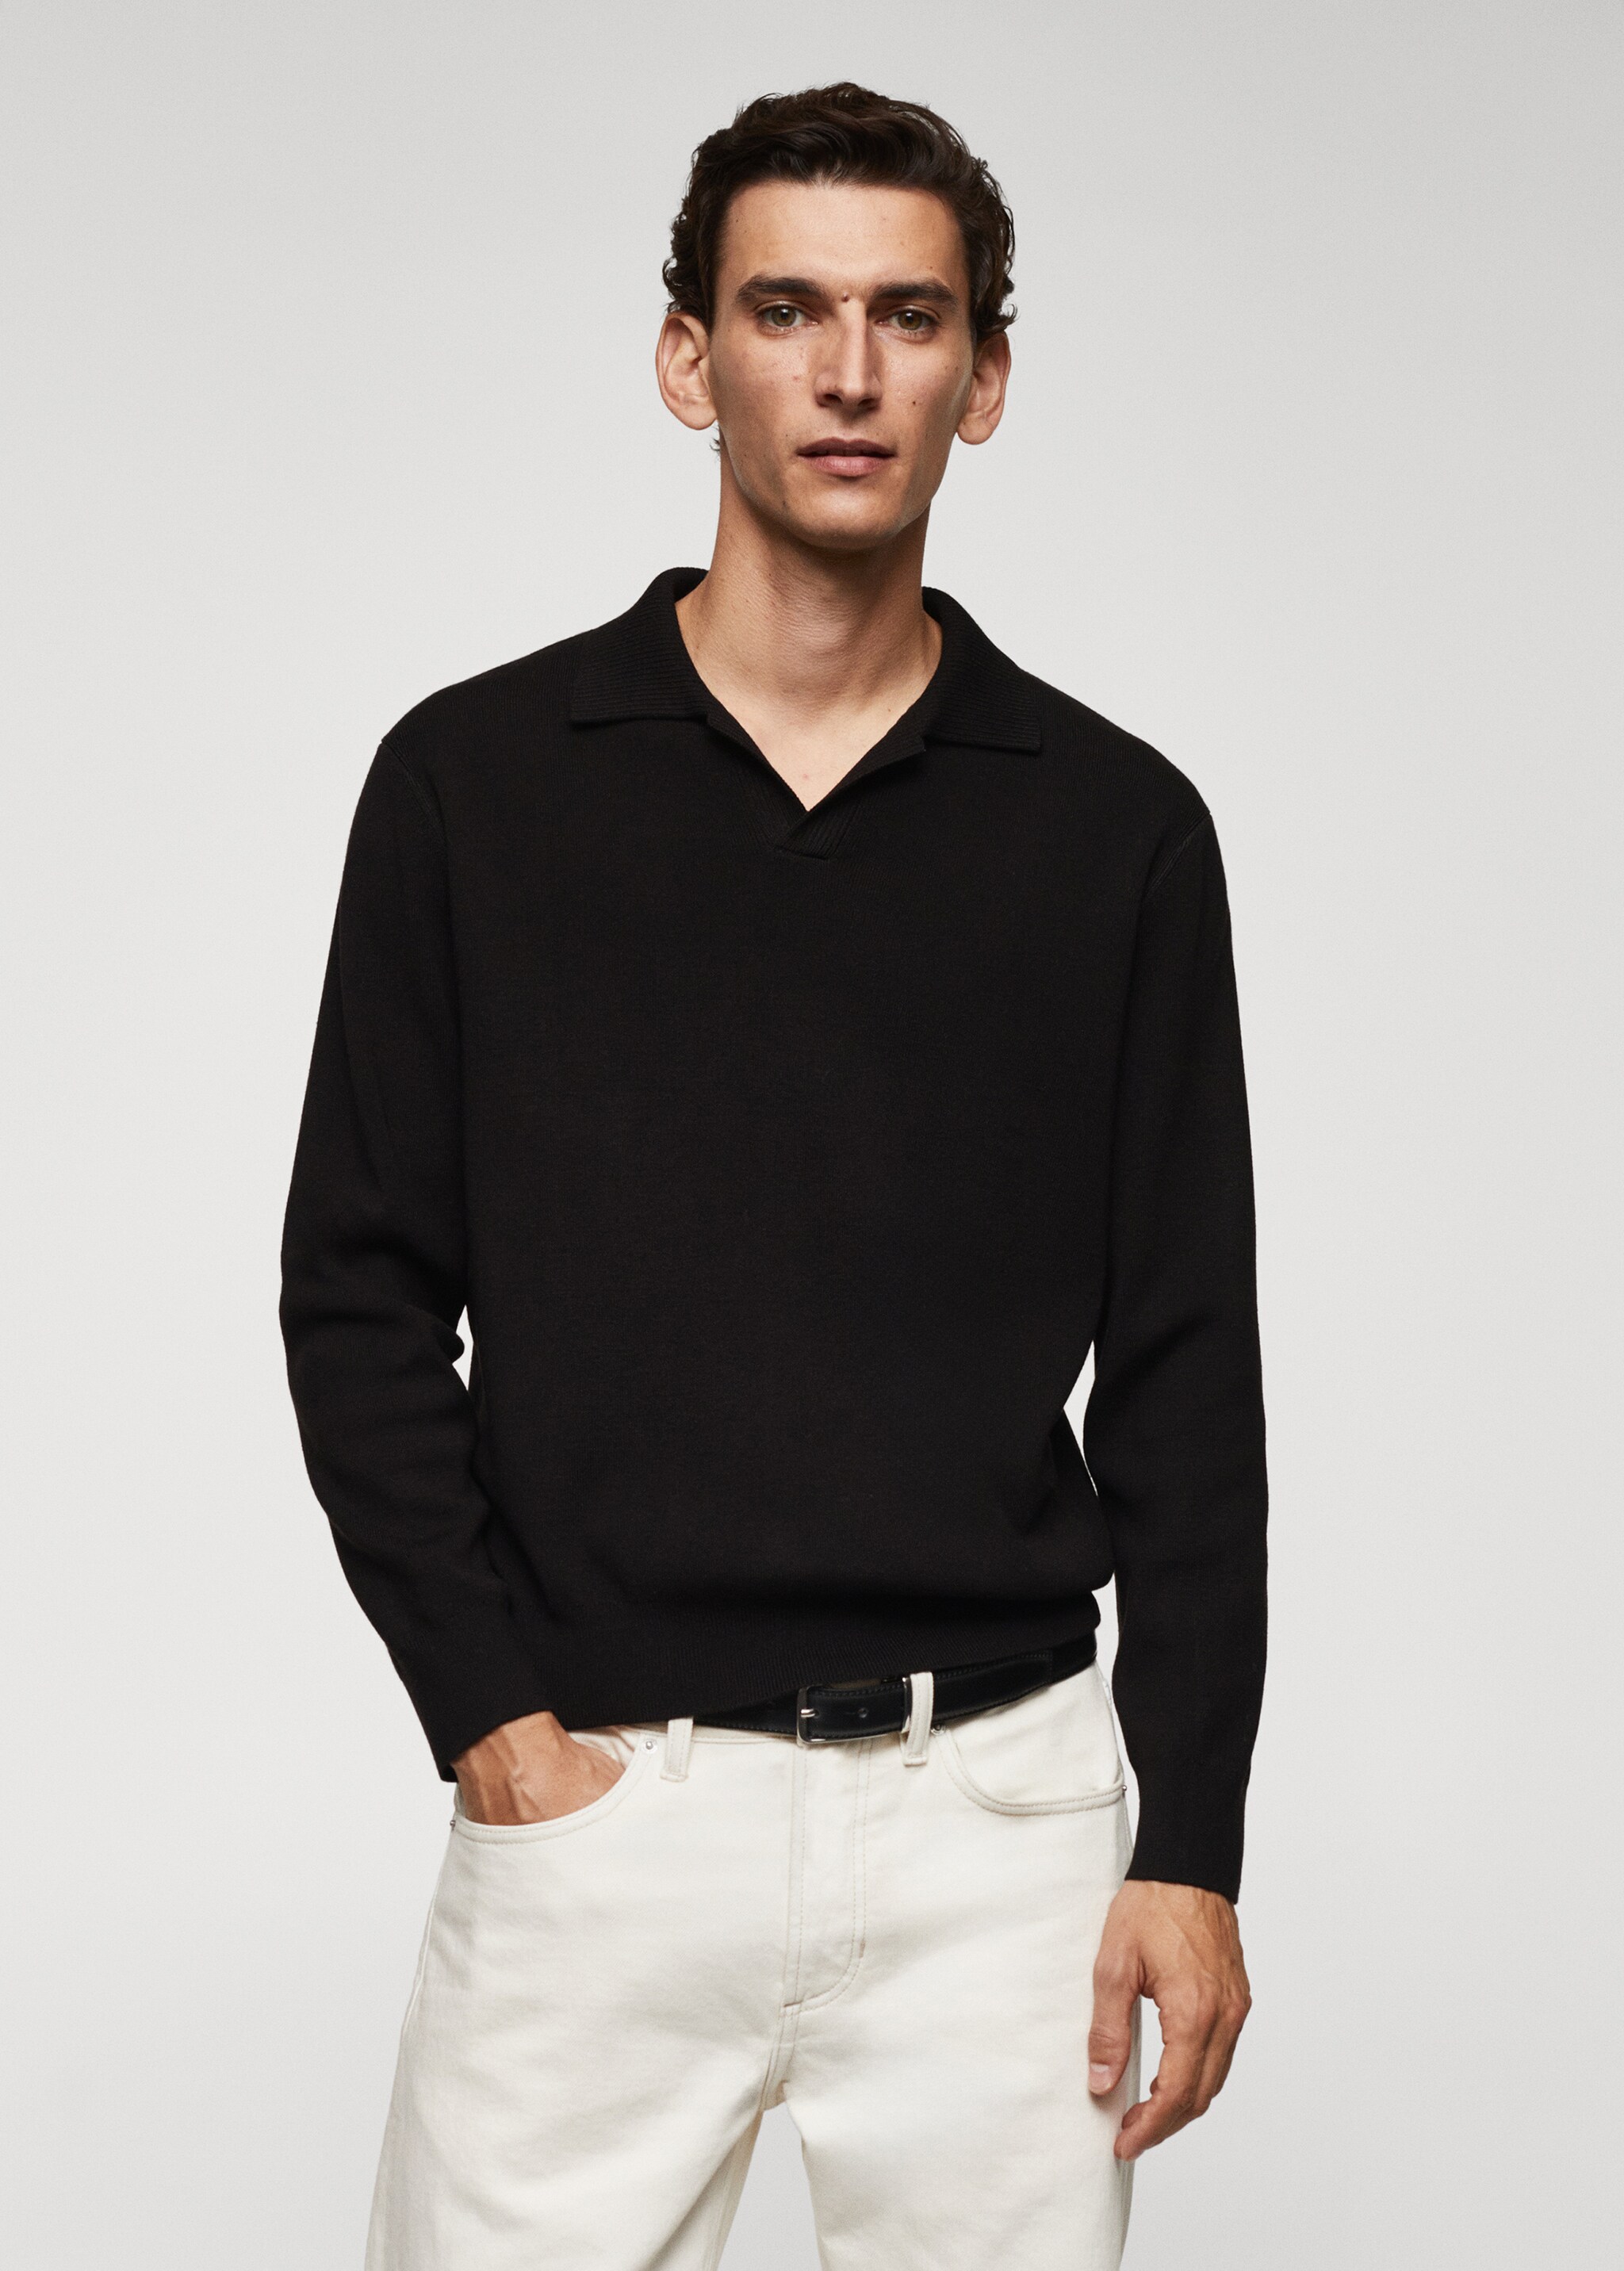 Polo collar wool sweater - Medium plane